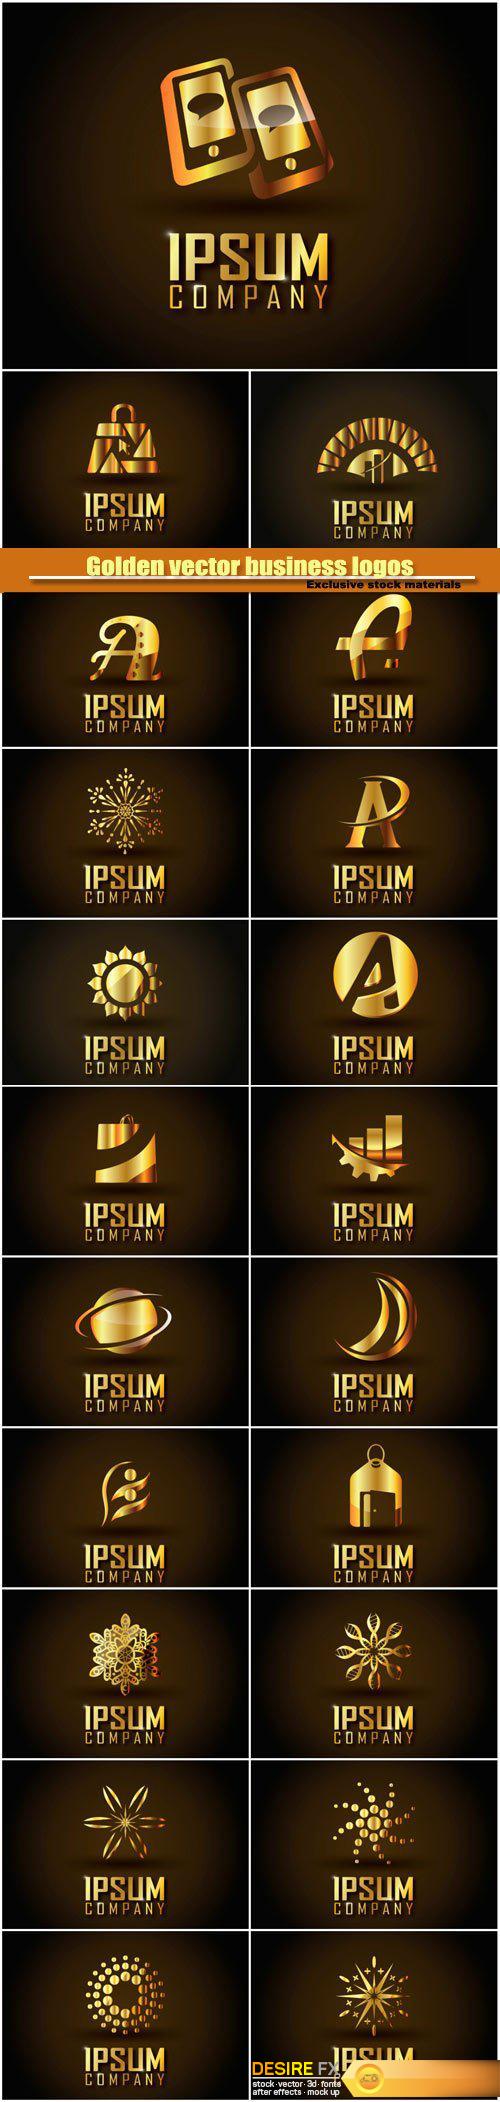 Golden vector business logos on a dark background